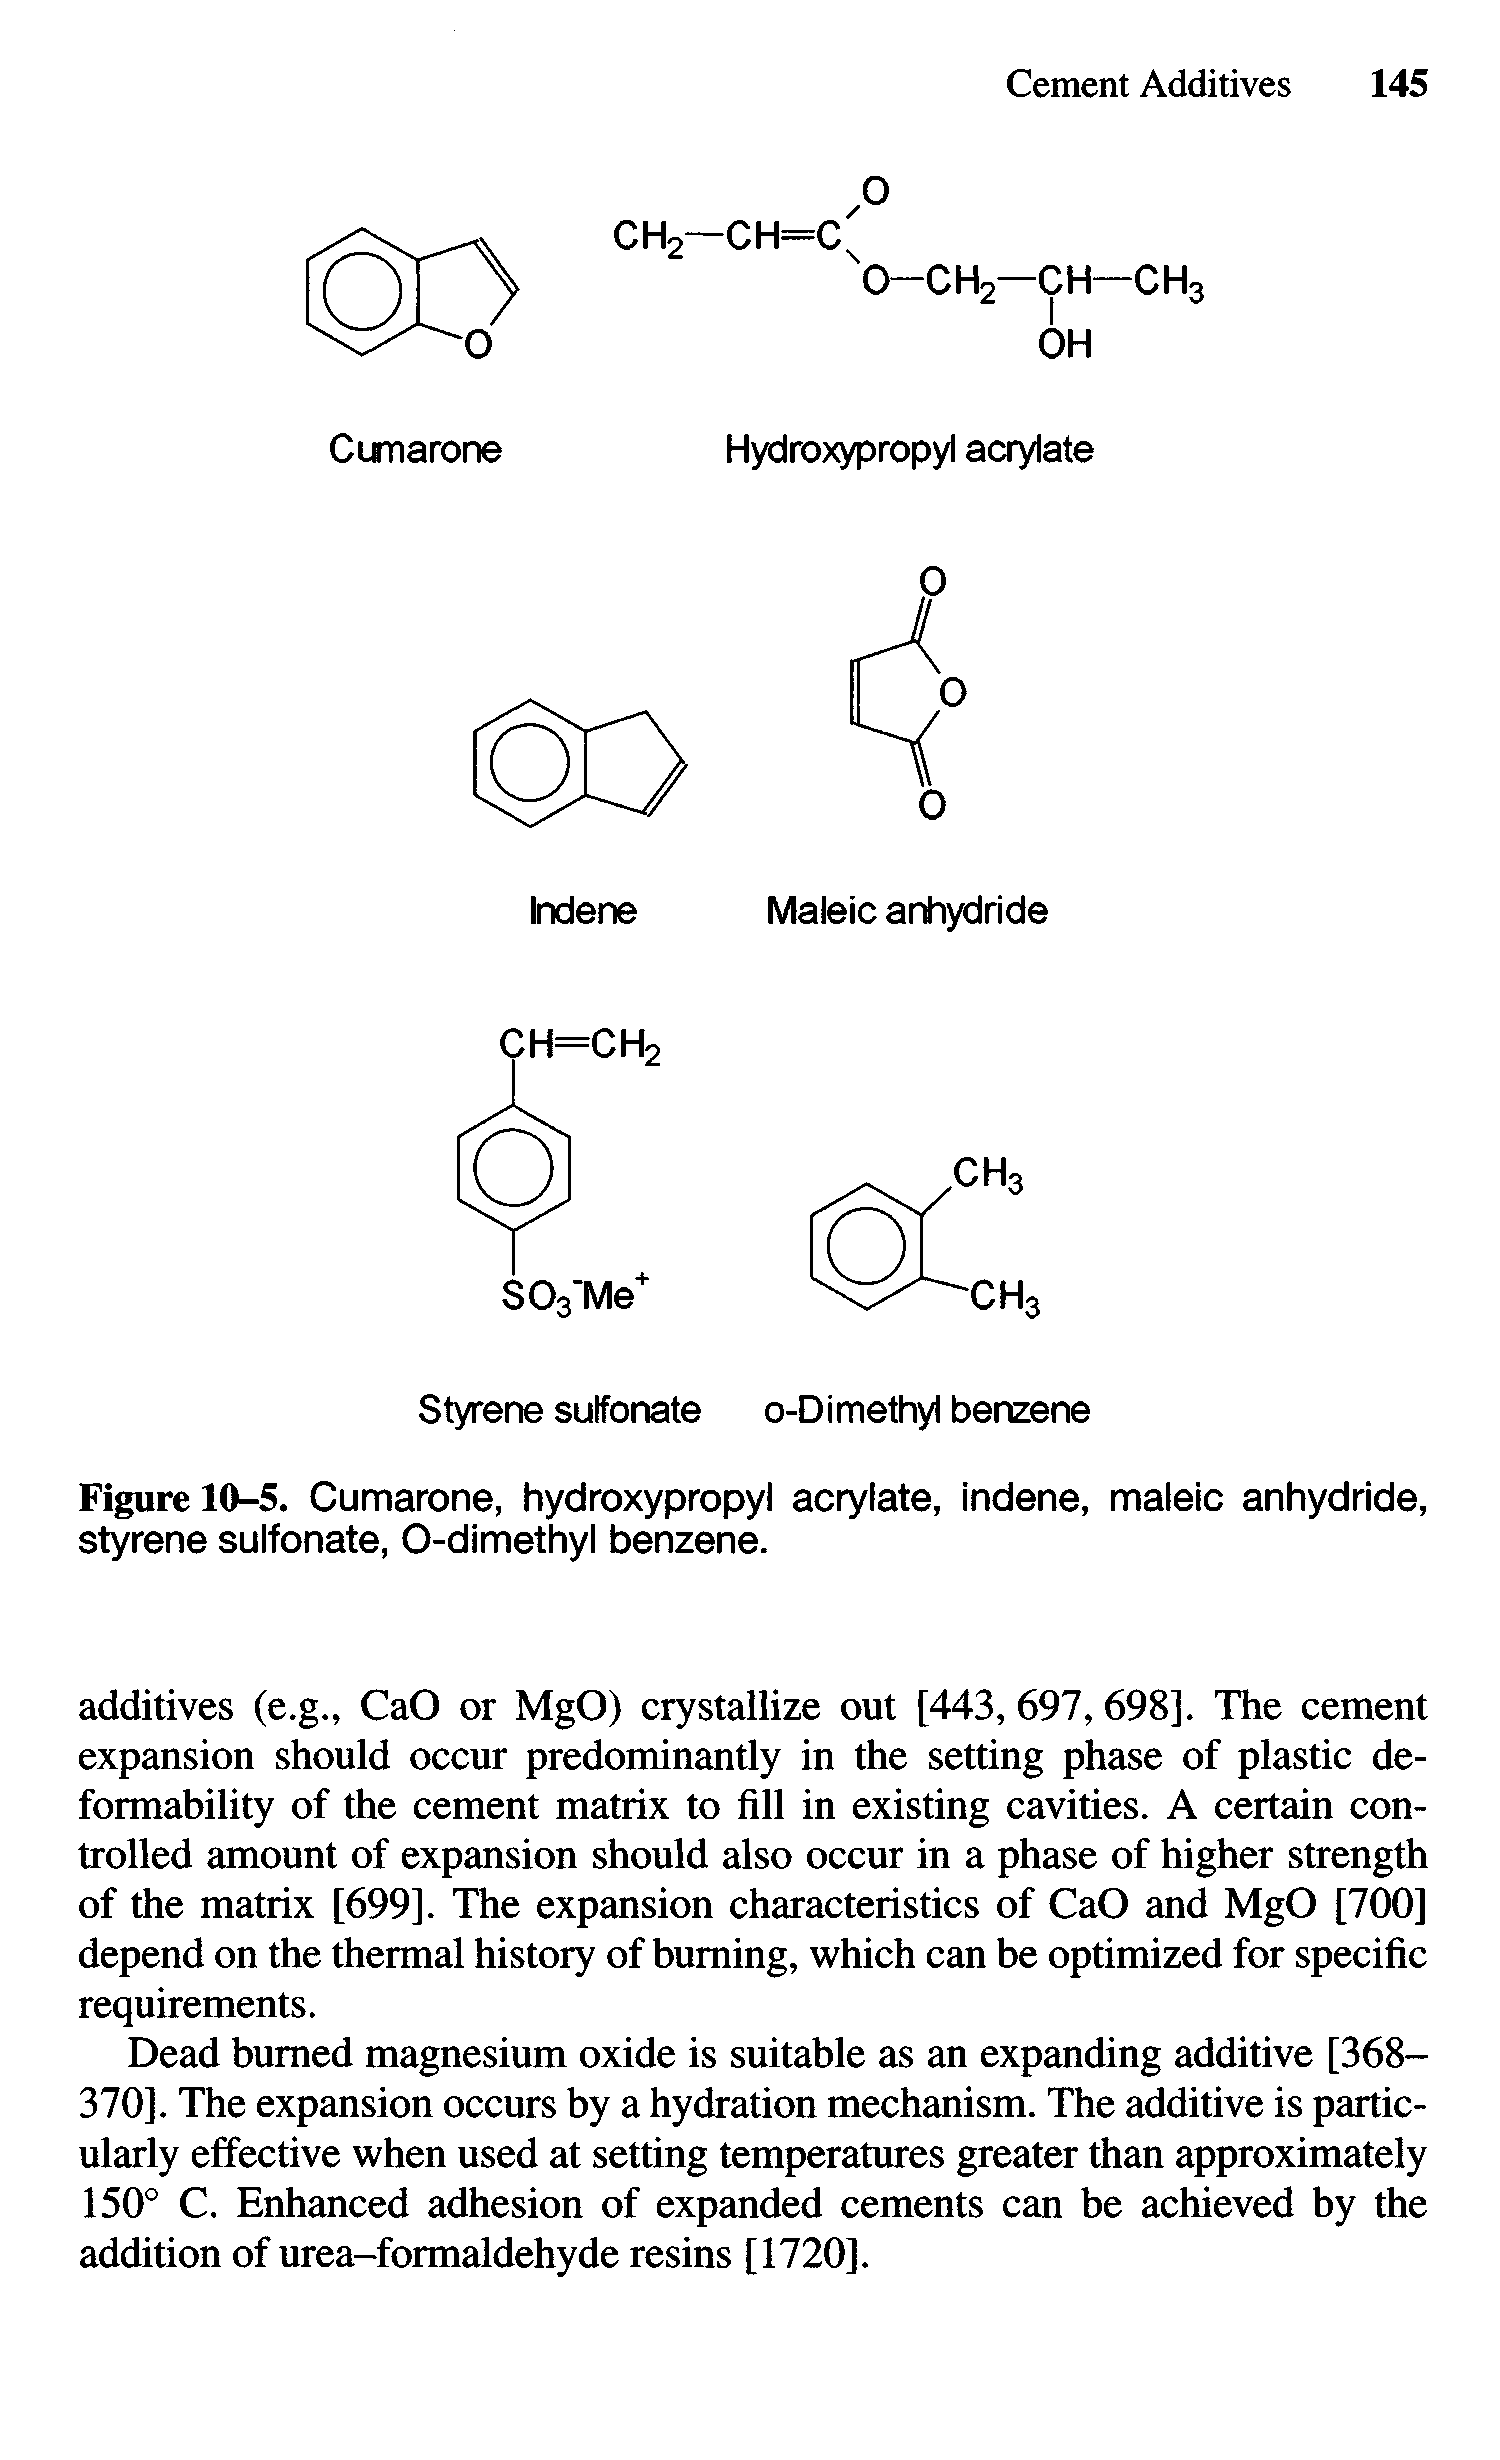 Figure 10-5. Cumarone, hydroxypropyl acrylate, Indene, maleic anhydride, styrene sulfonate, 0-dimethyl benzene.